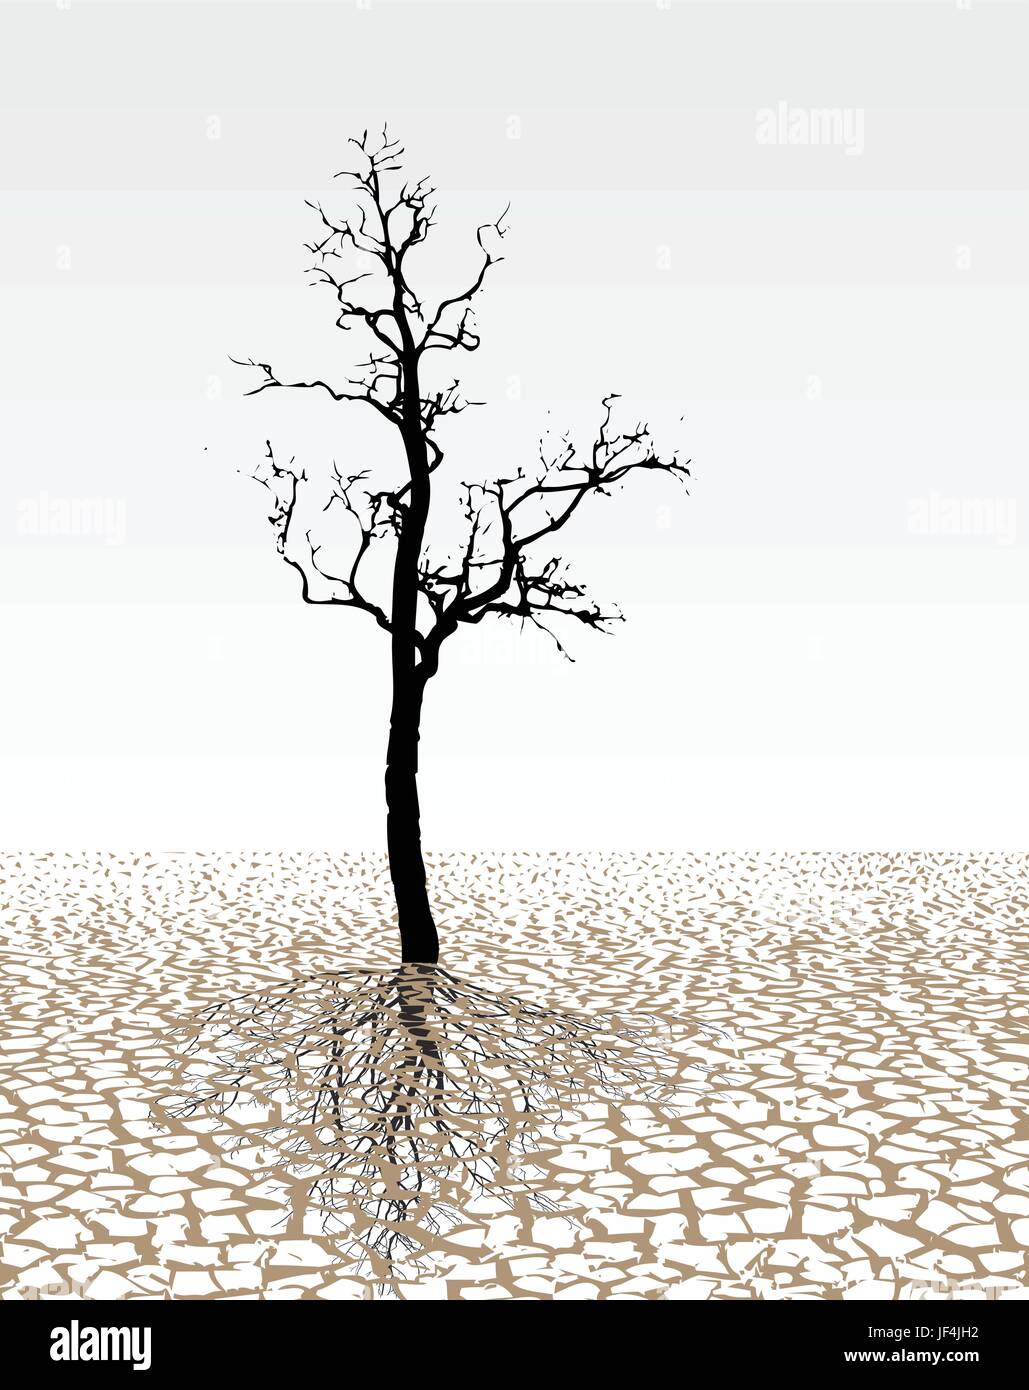 desert, wasteland, drought, dry, dried up, barren, disaster, season, arid, Stock Vector